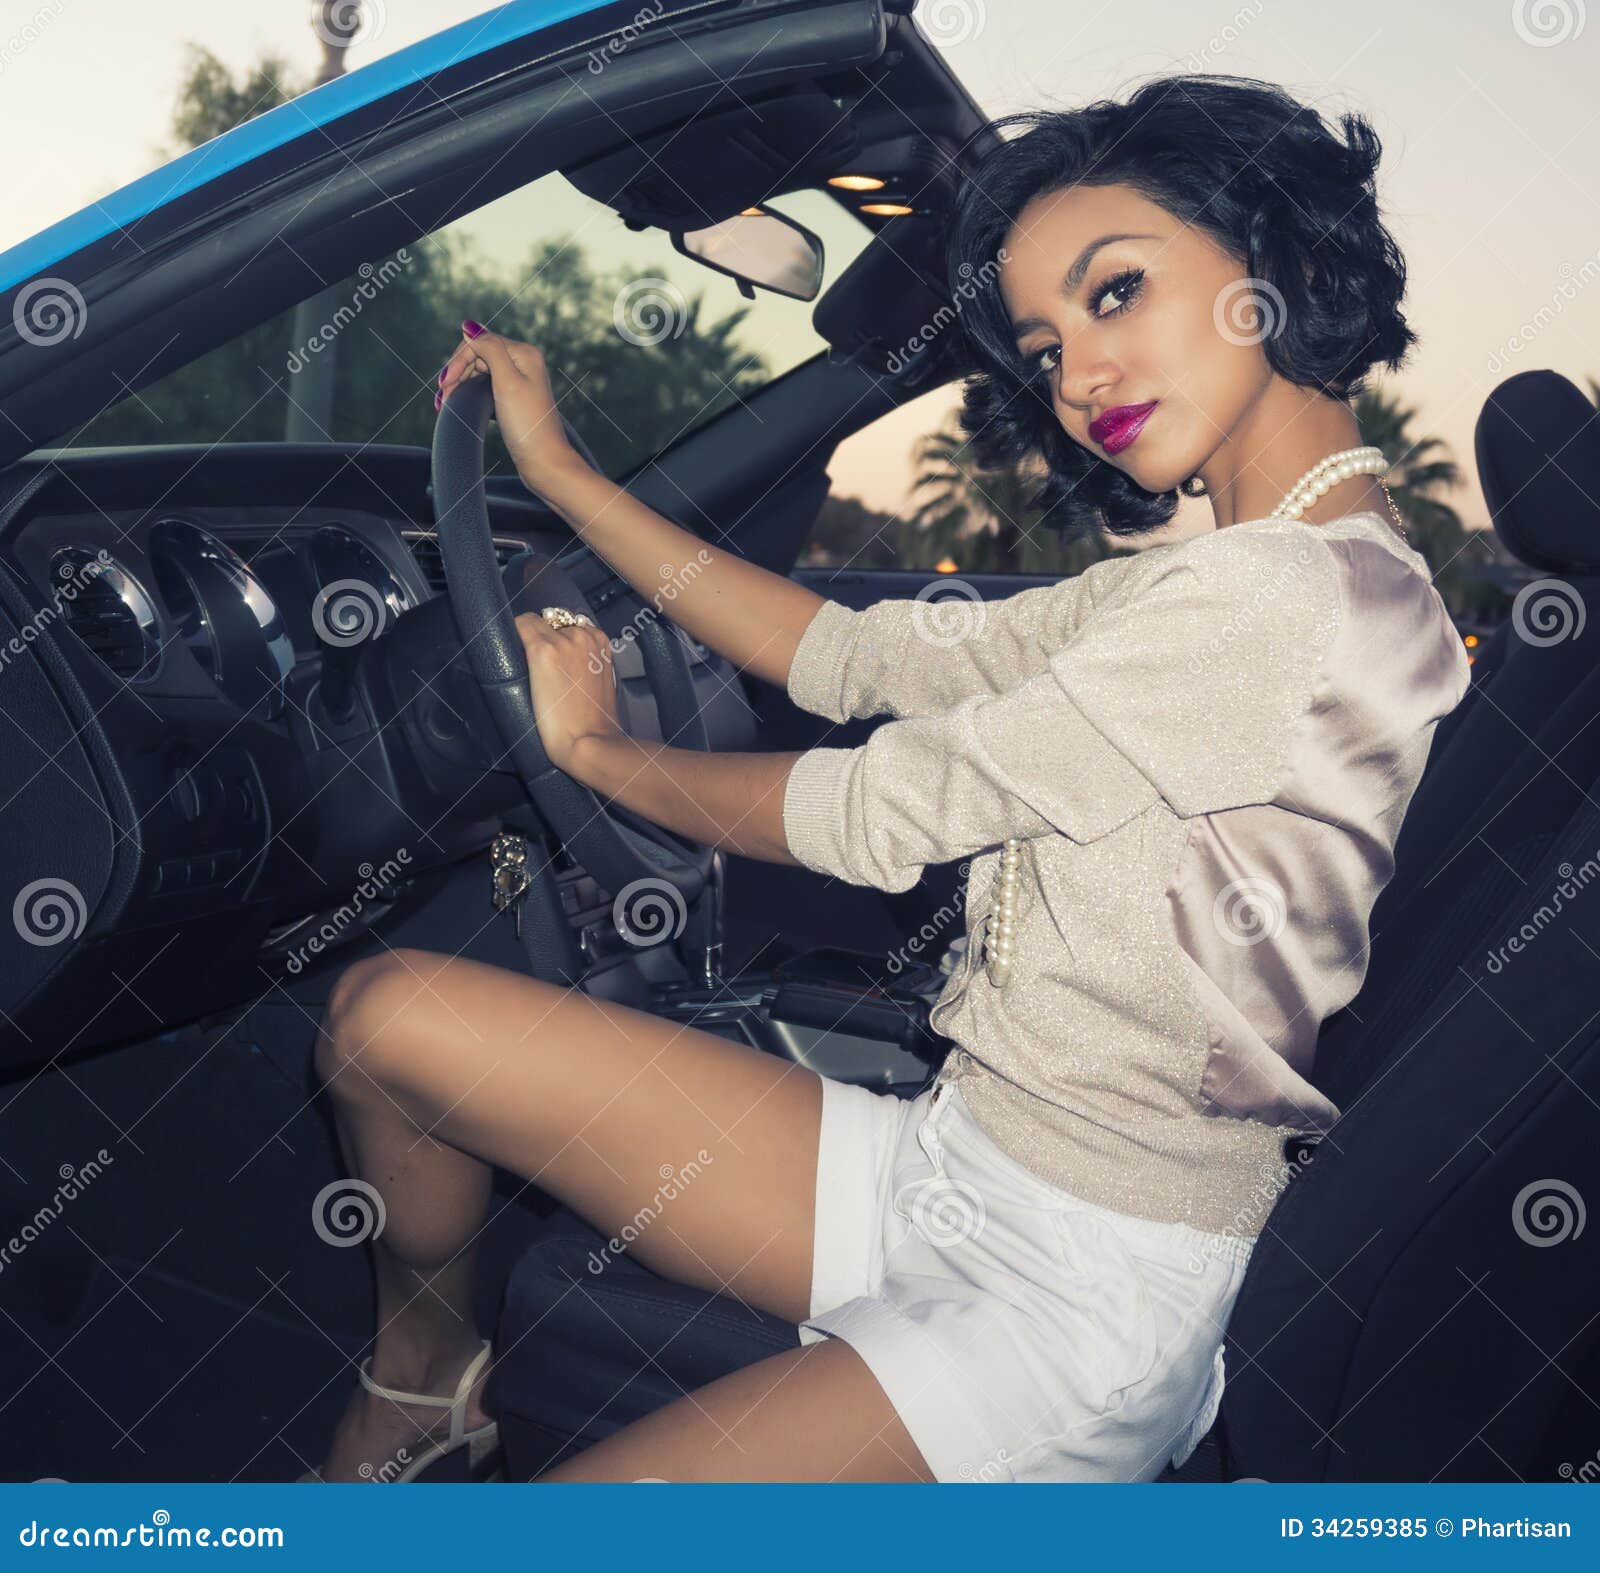 https://thumbs.dreamstime.com/z/young-woman-luxury-sports-car-beautiful-stylish-elegant-exotic-34259385.jpg